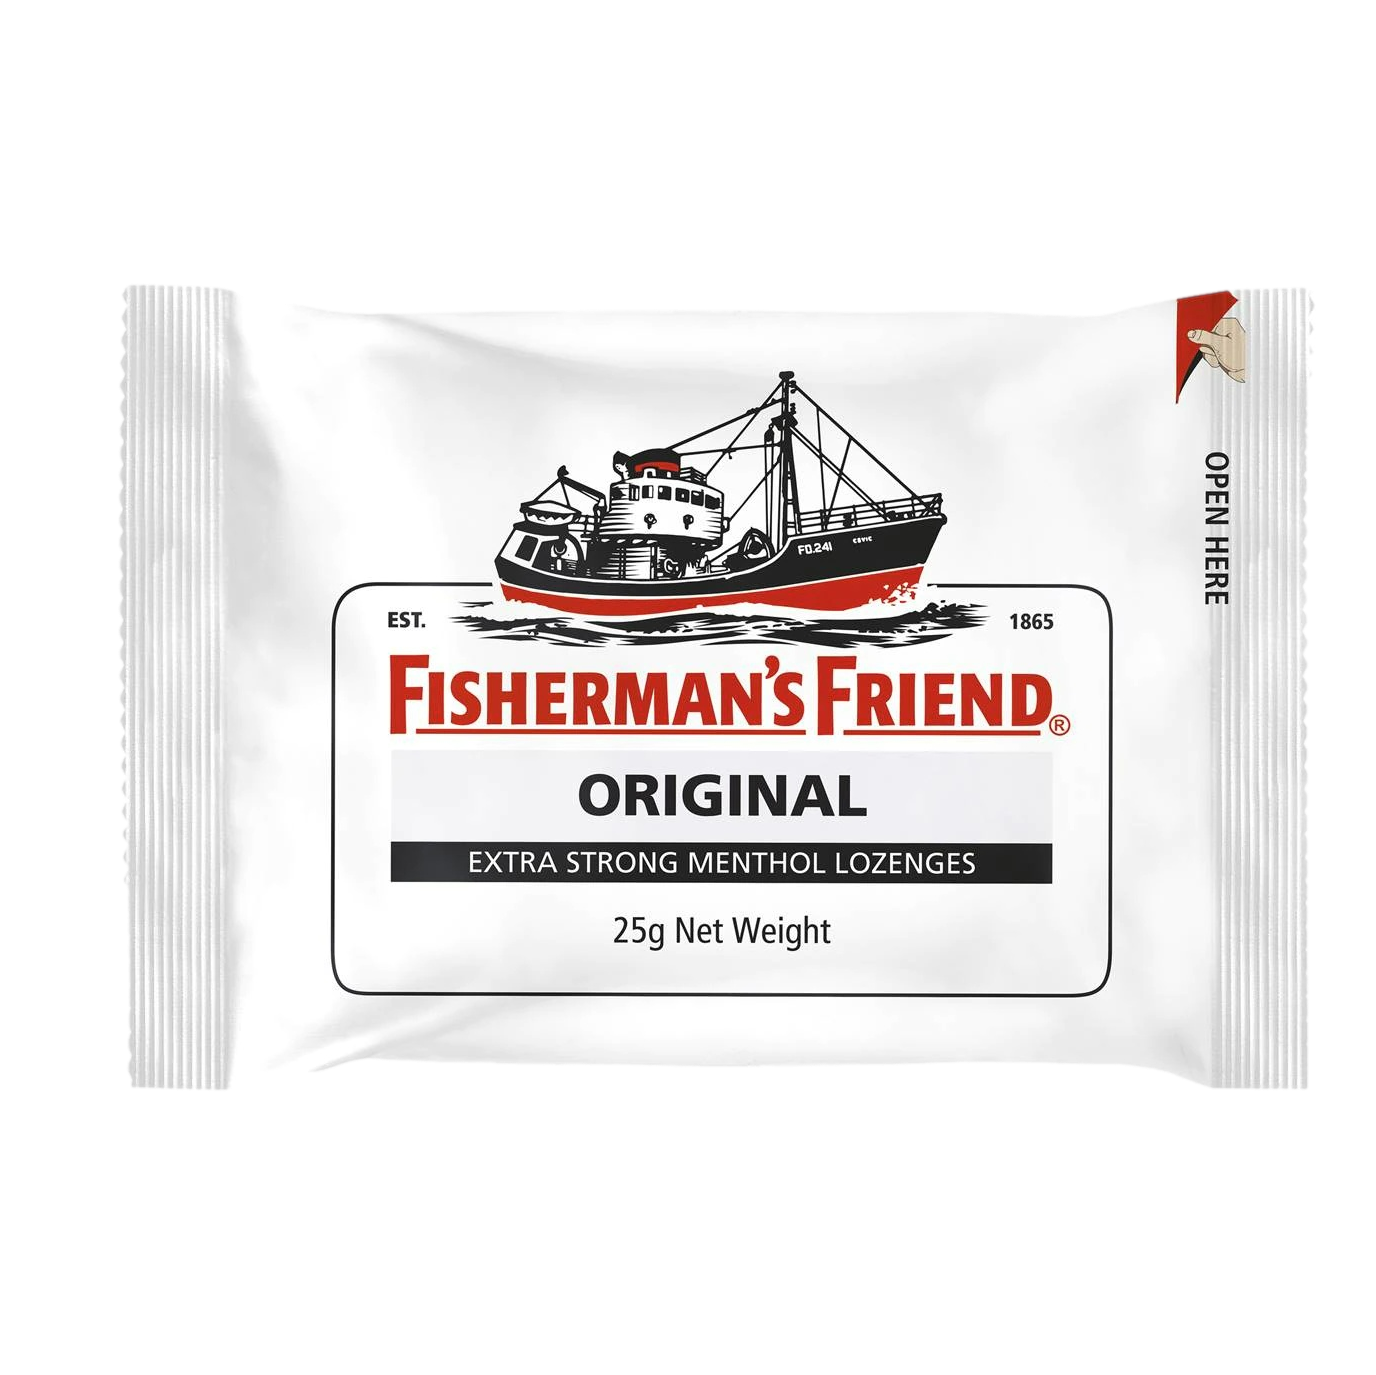 Fisherman's Friend Original Lozenges 25g